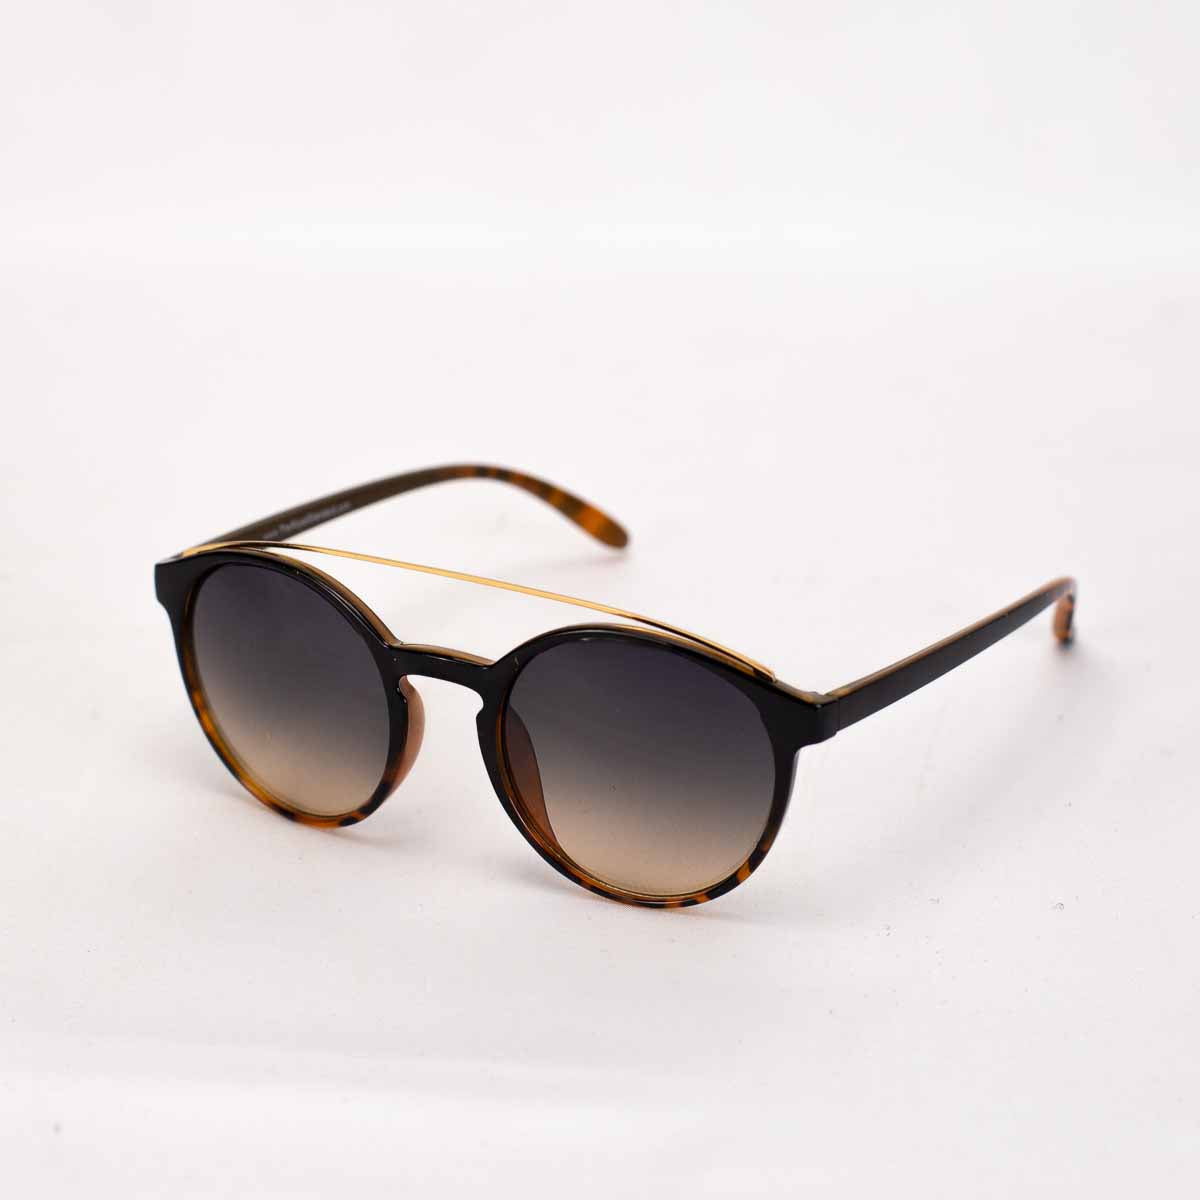 Solana Tortoise Sunglasses Sunglasses in  at Wrapsody